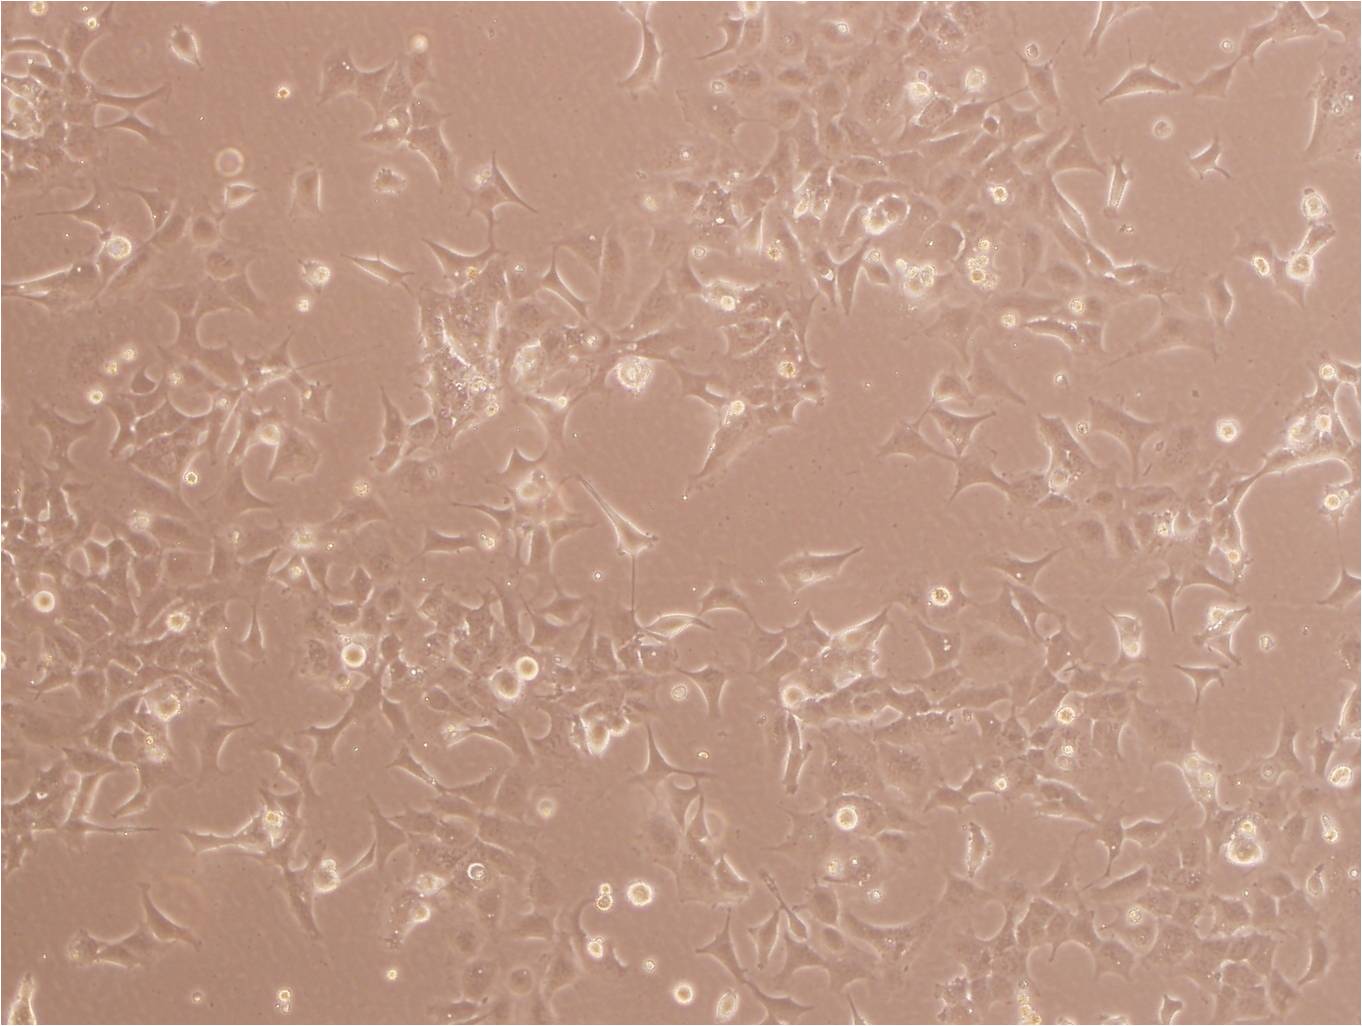 FRTL-5 Cell:大鼠甲状腺细胞系,FRTL-5 Cell